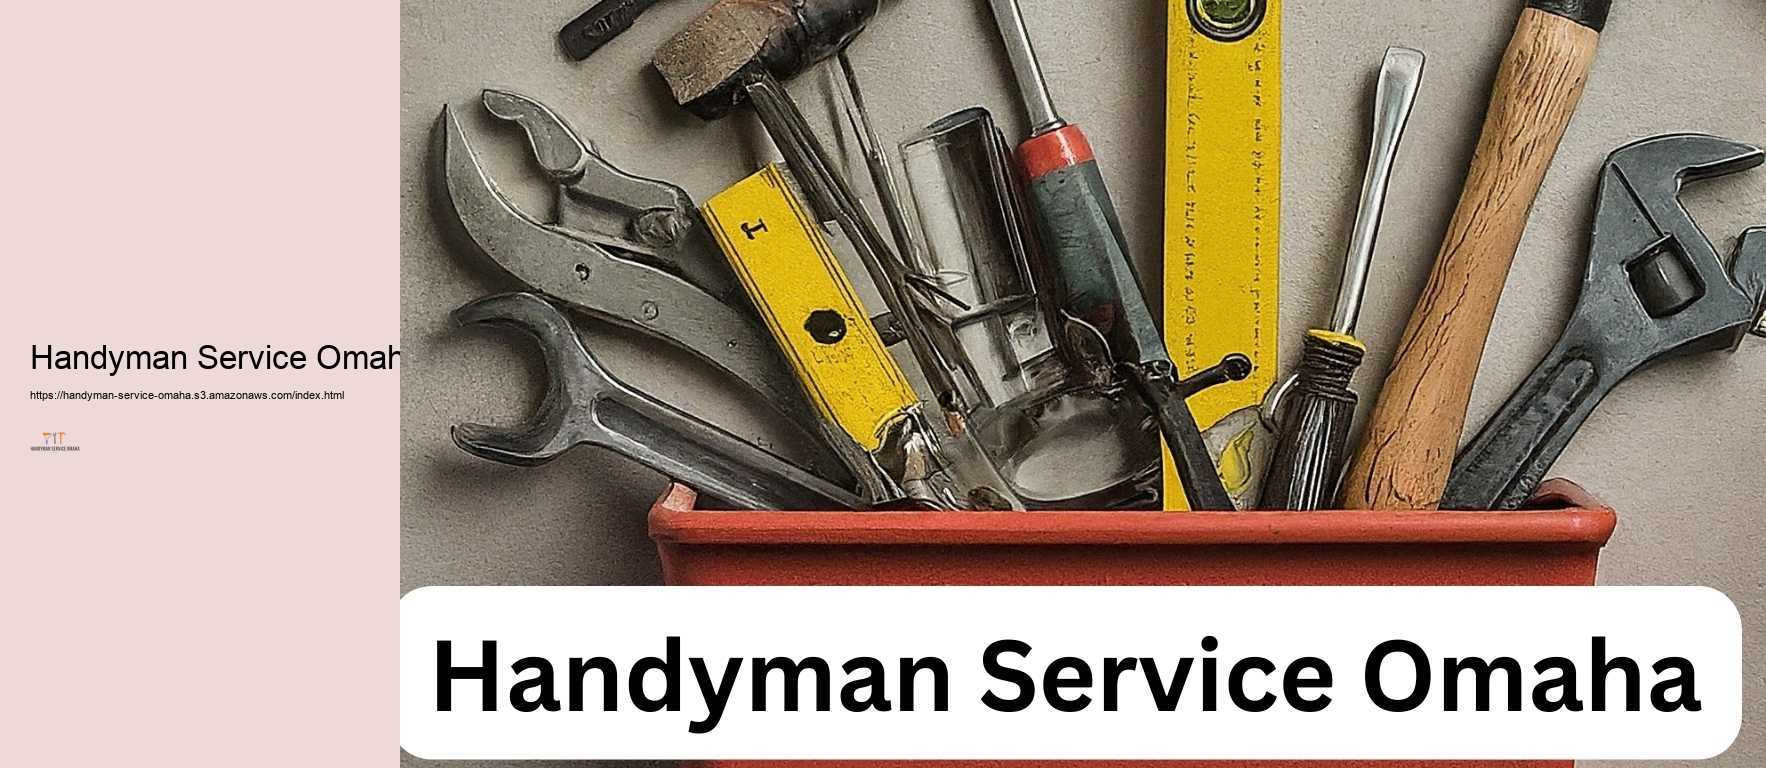 Handyman Service Omaha